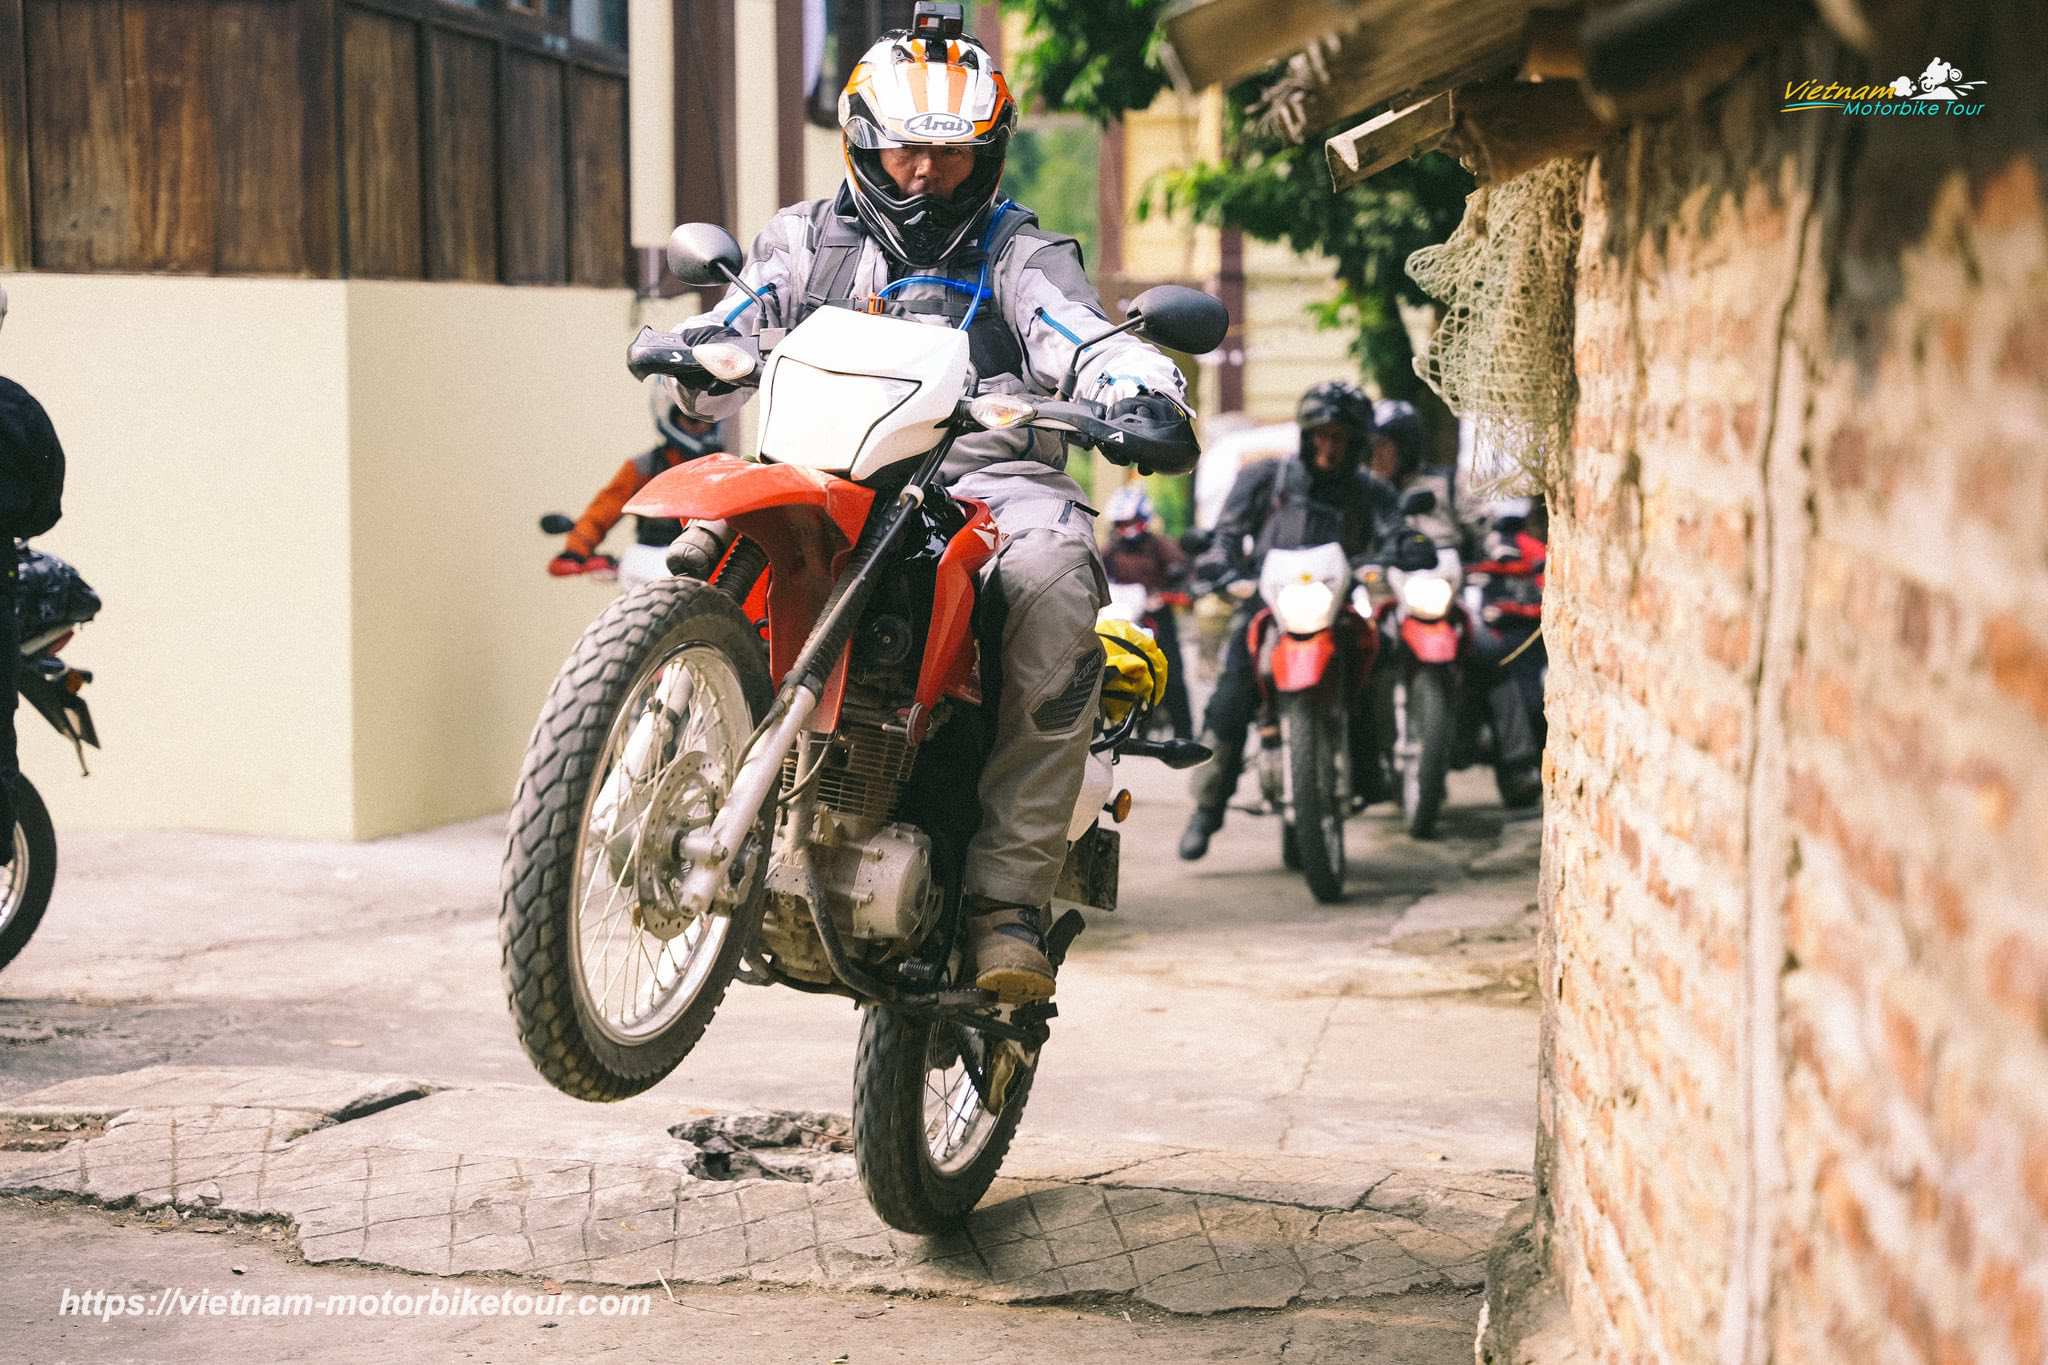 Enthralling North Vietnam Off-road Motorbike Tour via Tram Tau, Ta Xua, Dien Bien - 10 Days